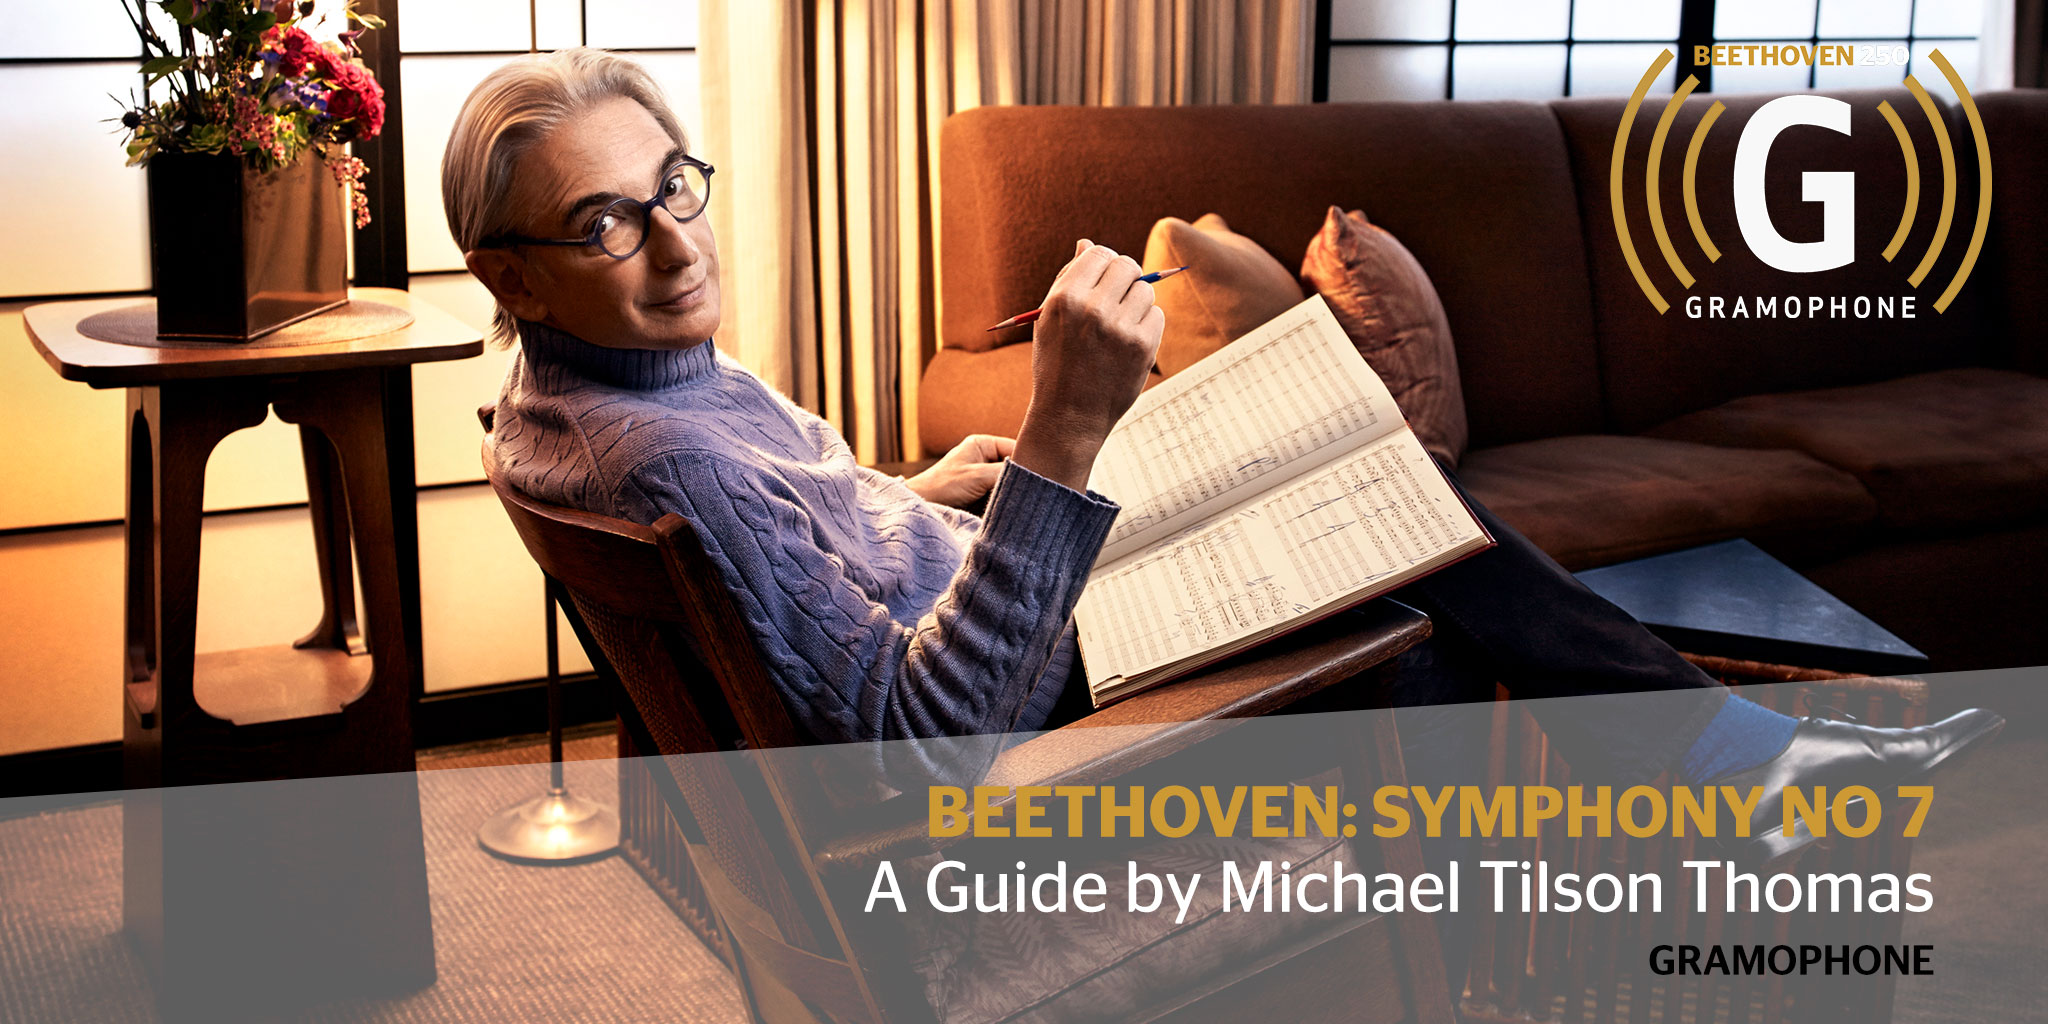 Beethoven symphonies